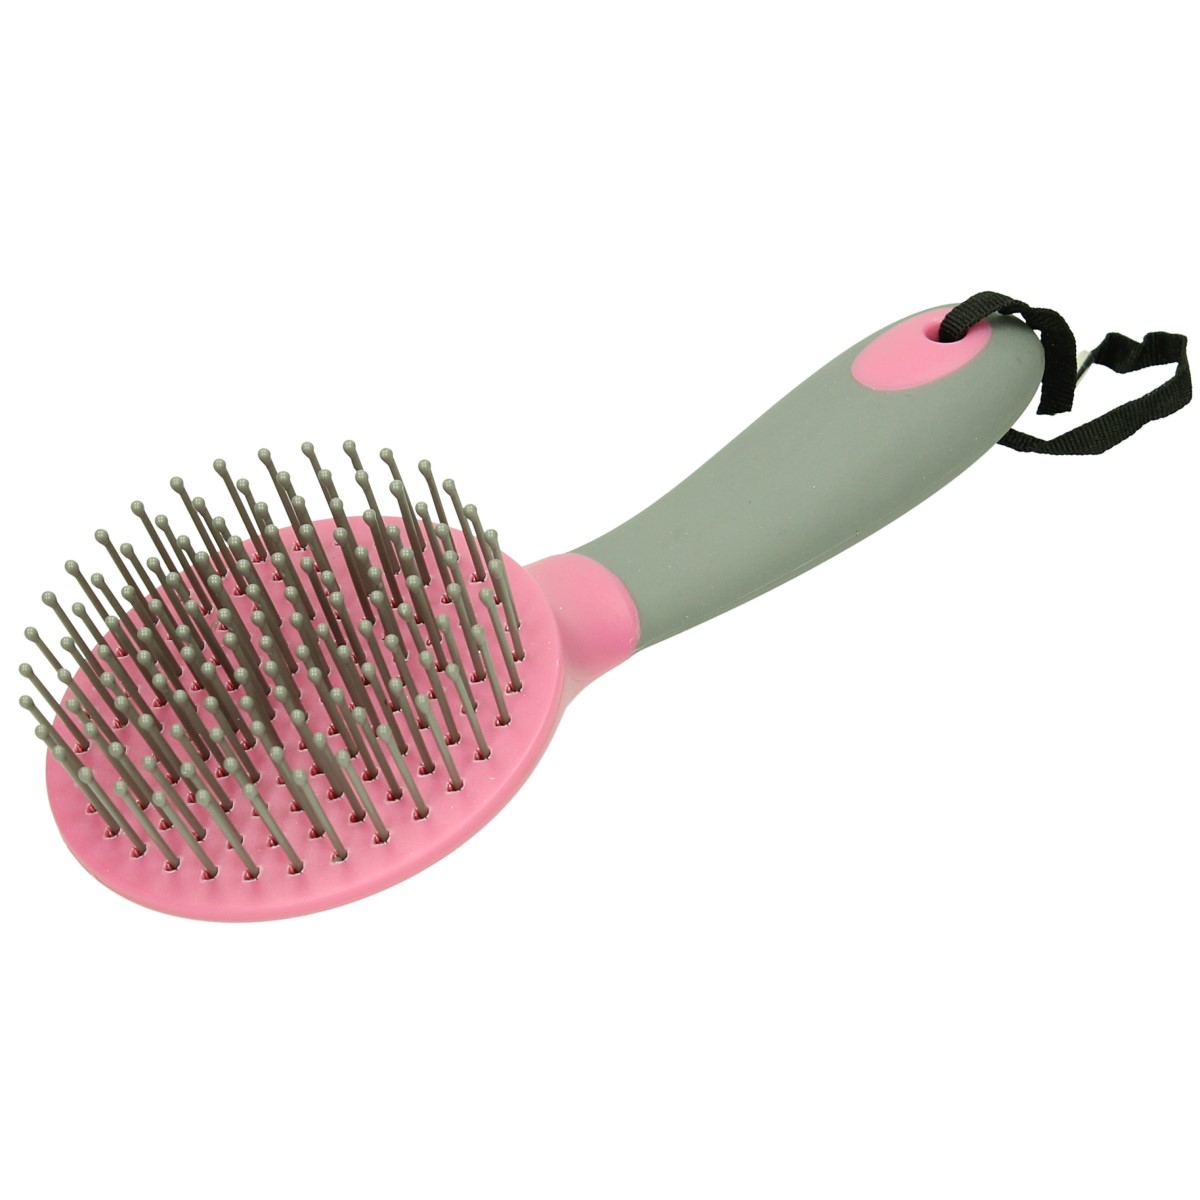 Oster Grooming Brush - Stiff